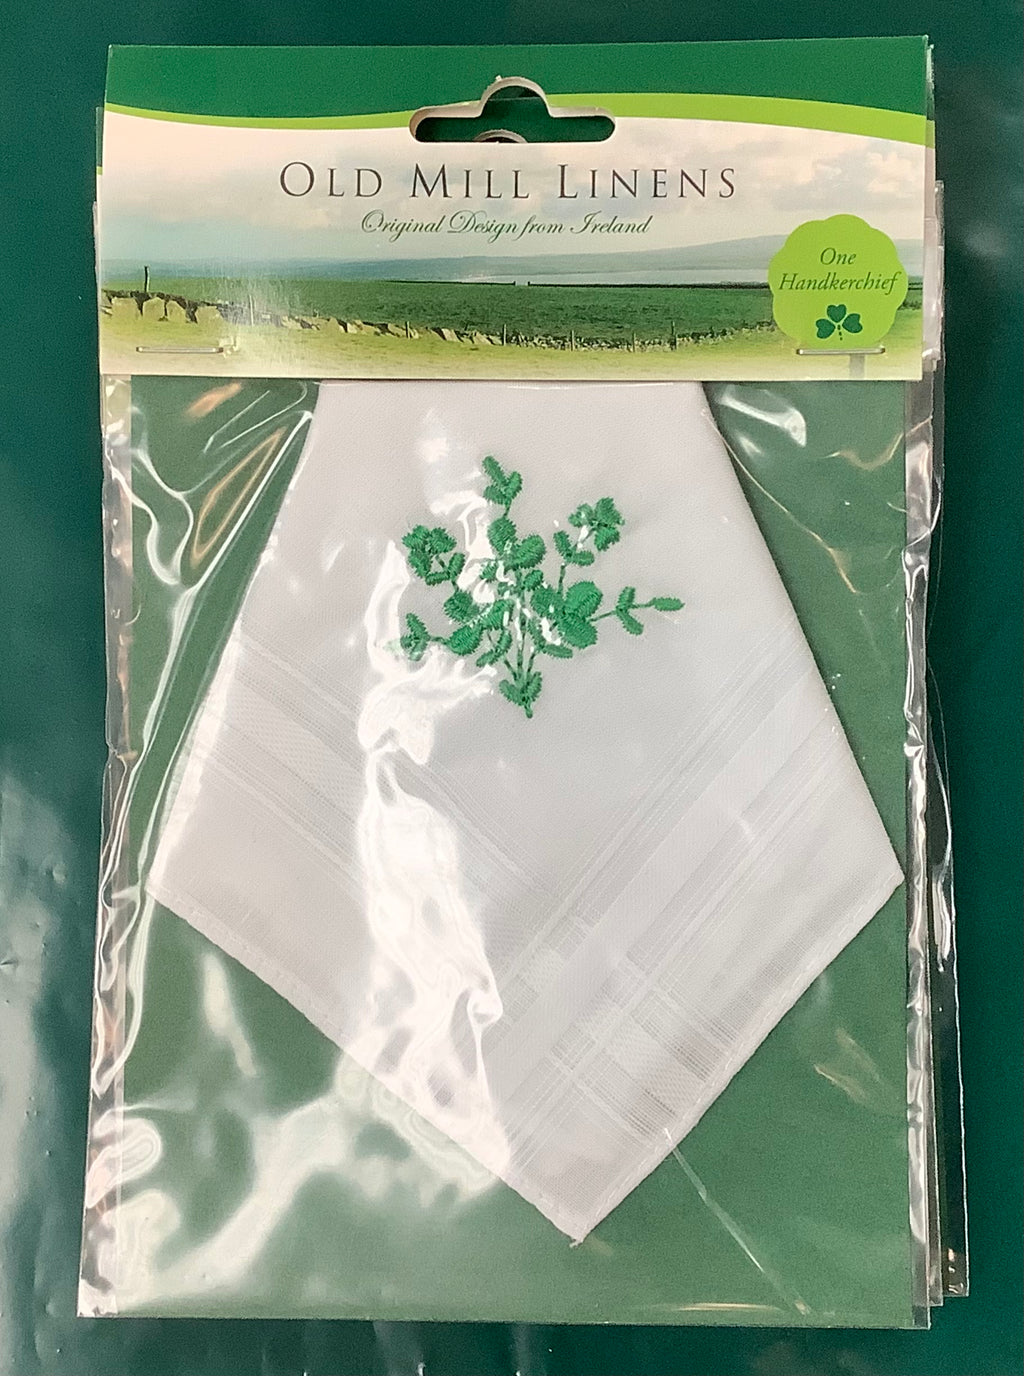 Cotton handkerchiefs